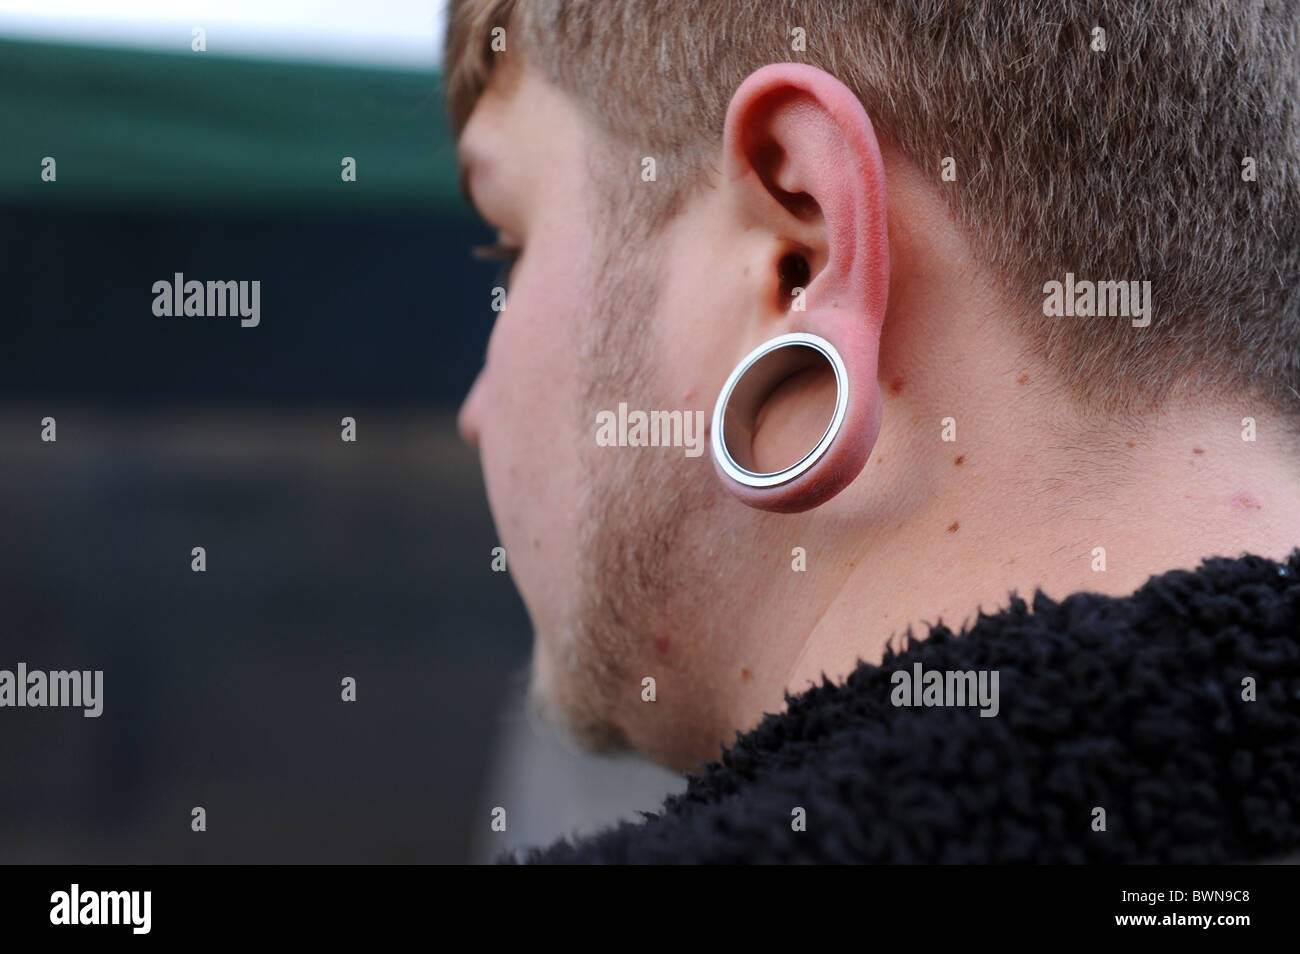 Young man wearing tribal earring Stock Photo